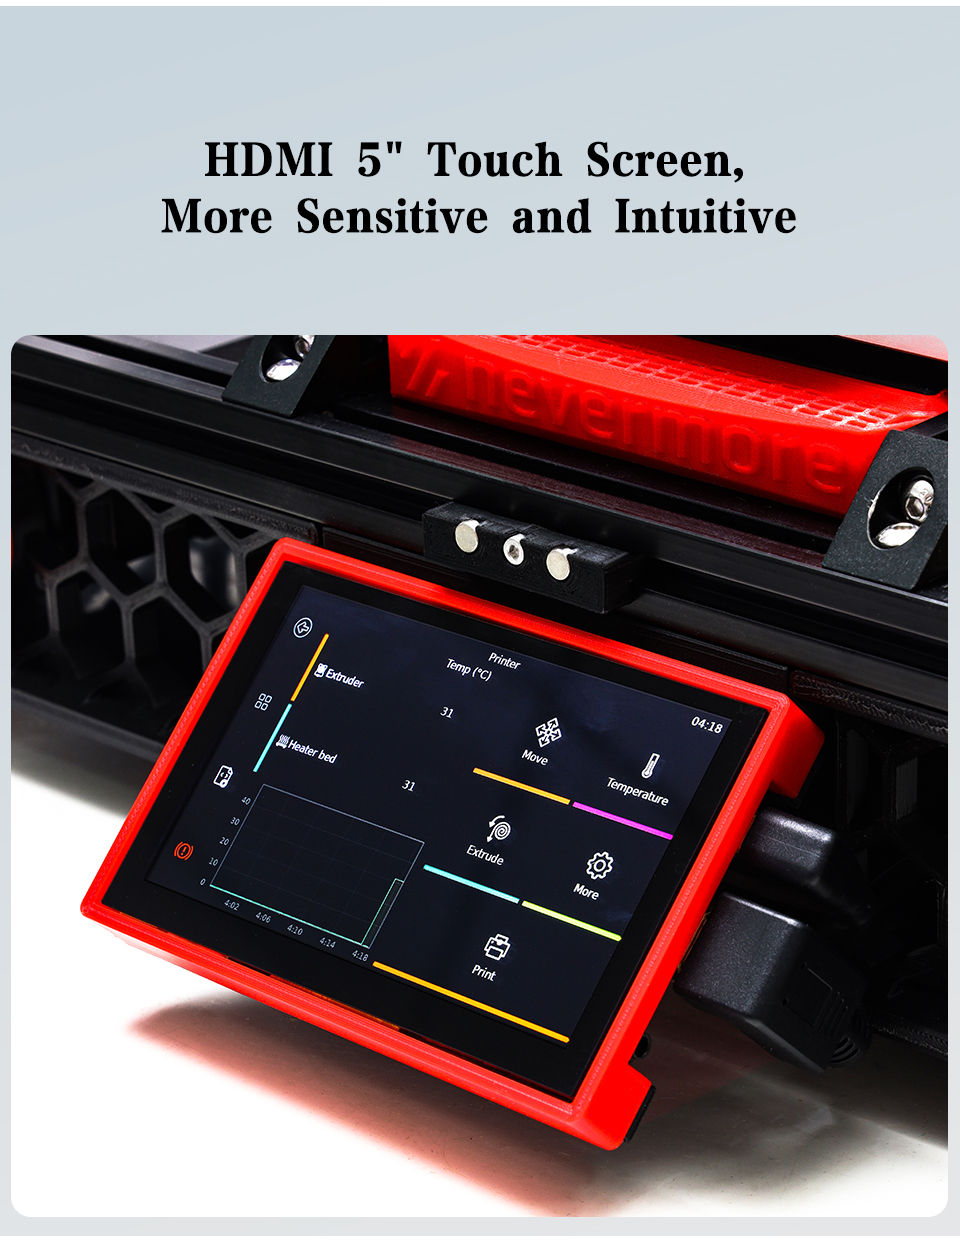 voron 2.4 r2 pro hdmi touch screen